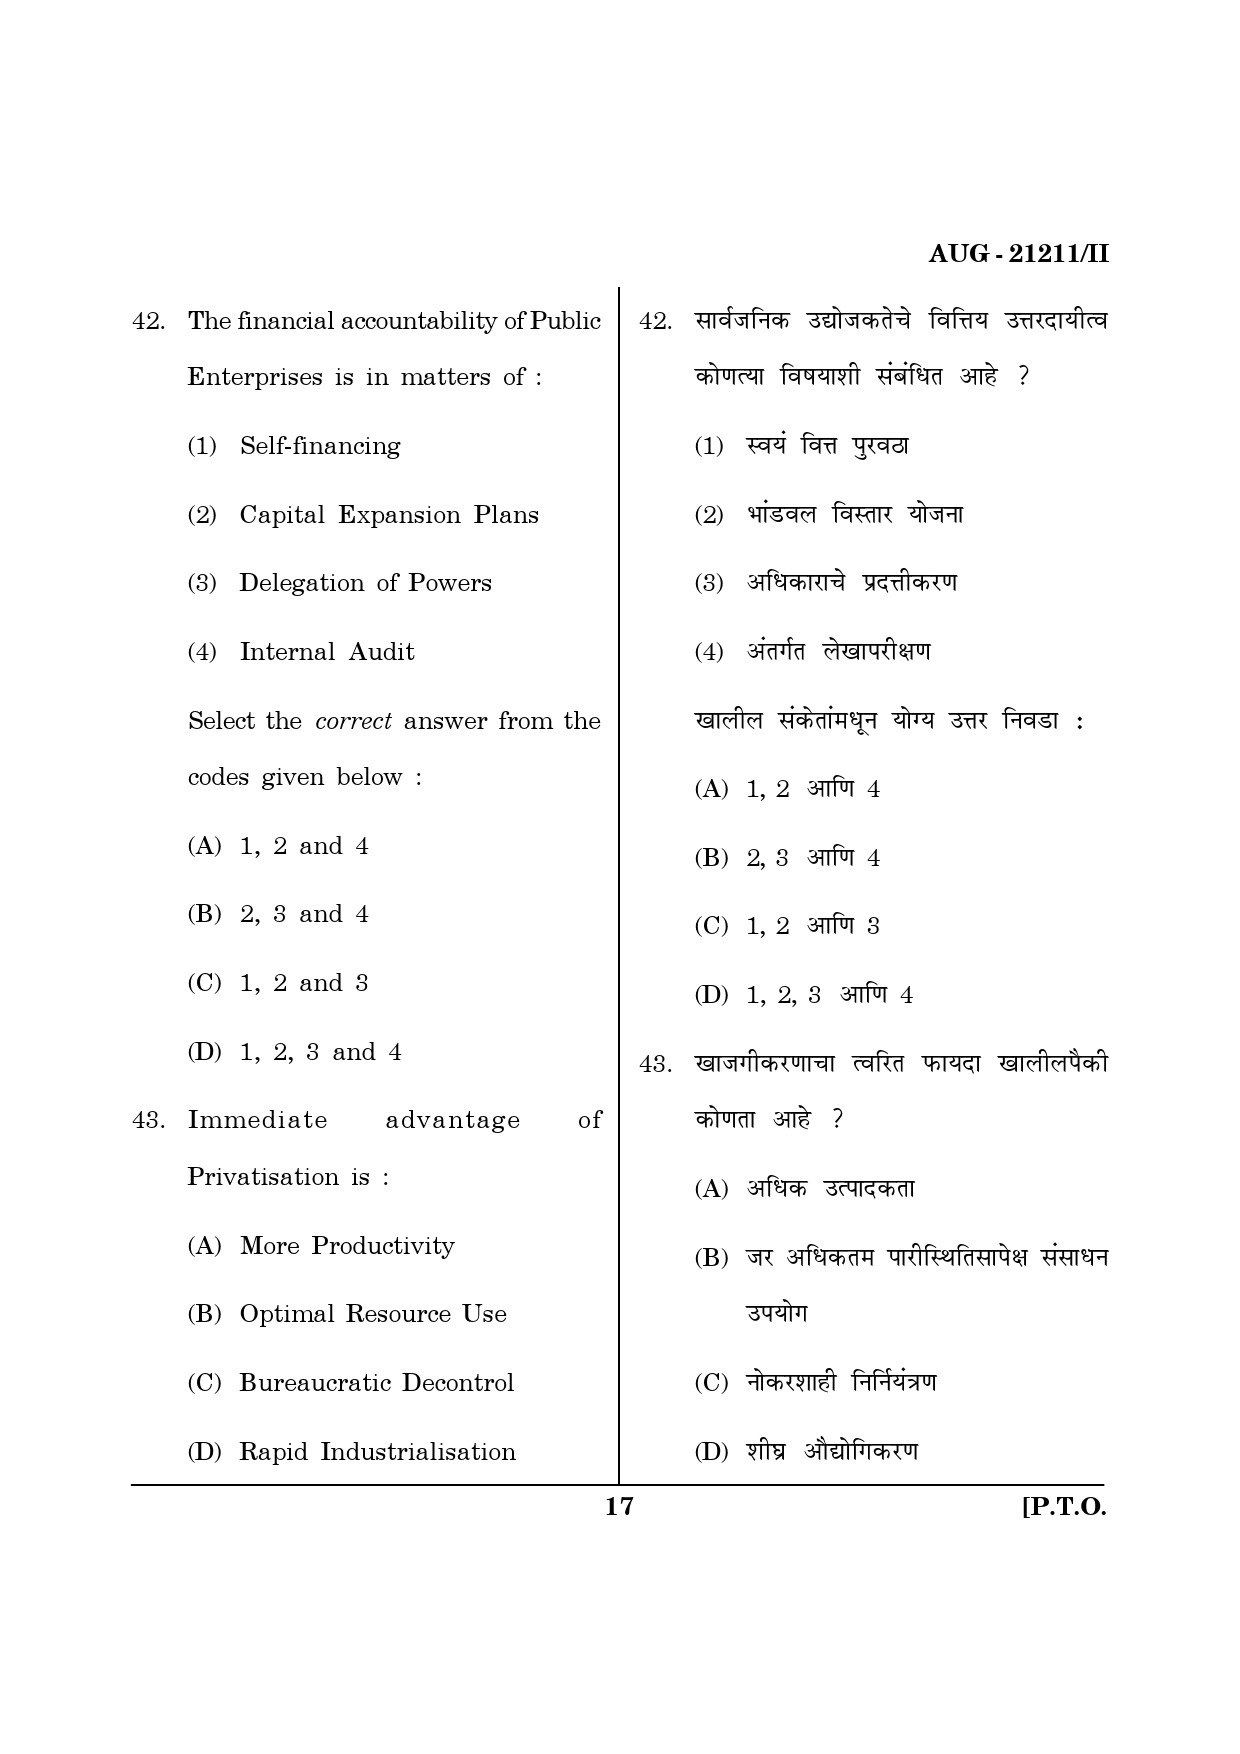 Maharashtra SET Public Administration Question Paper II August 2011 17